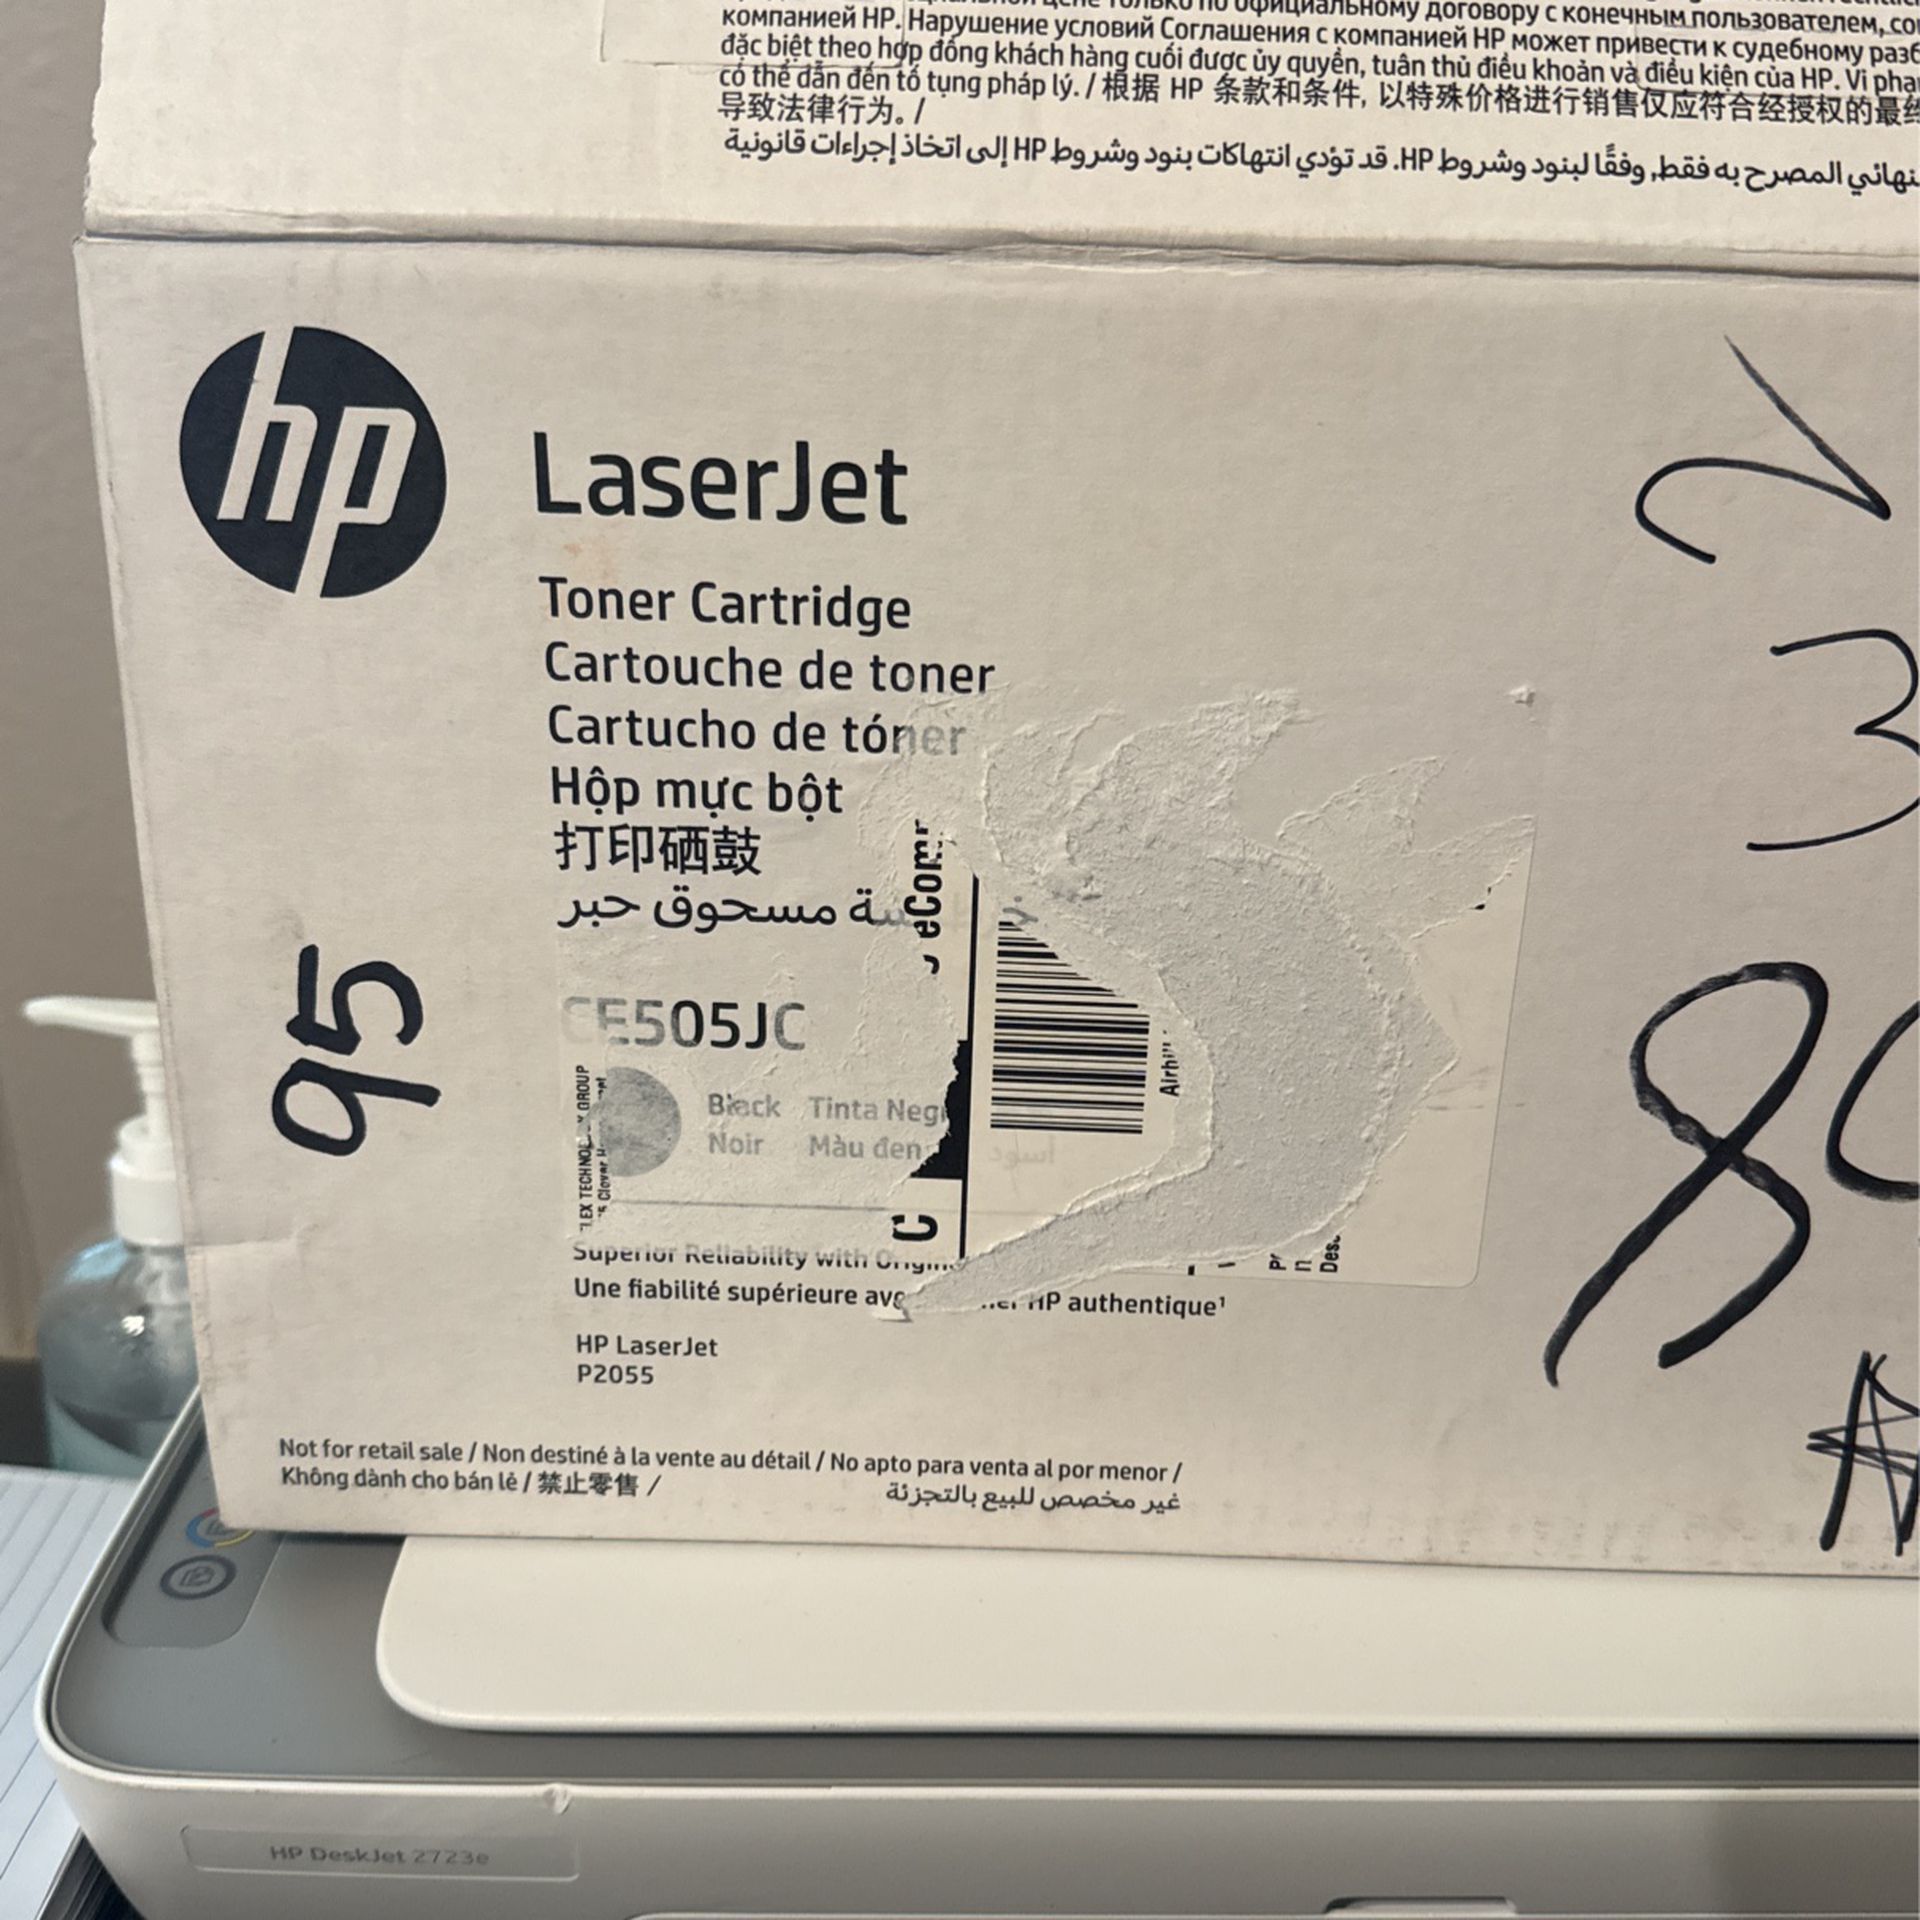 HP LaserJet Toner Cartridge